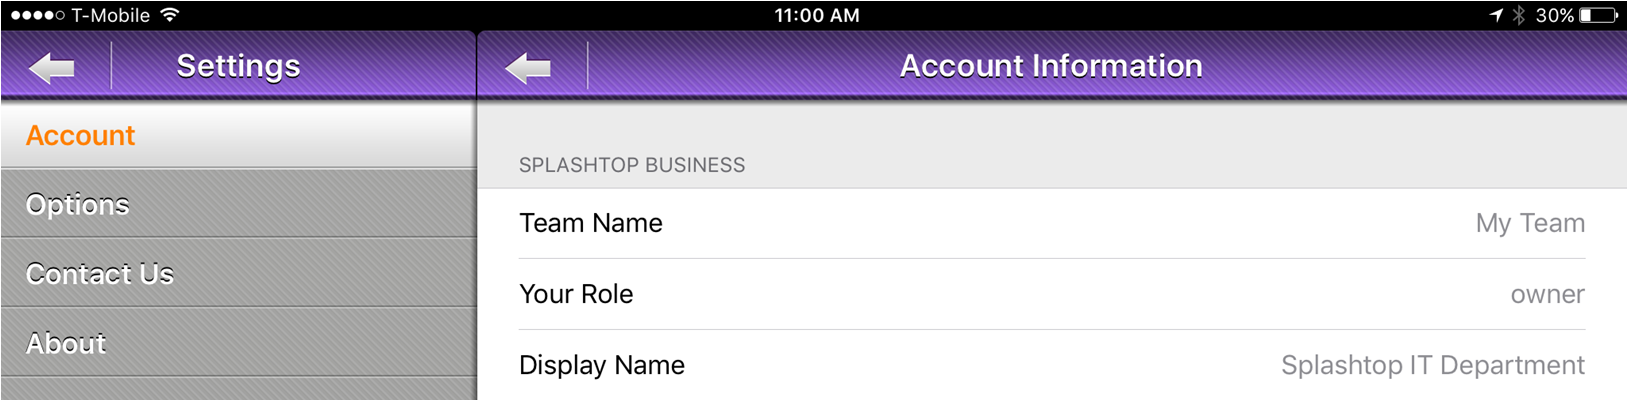 Splashtop Business Account Information Settings